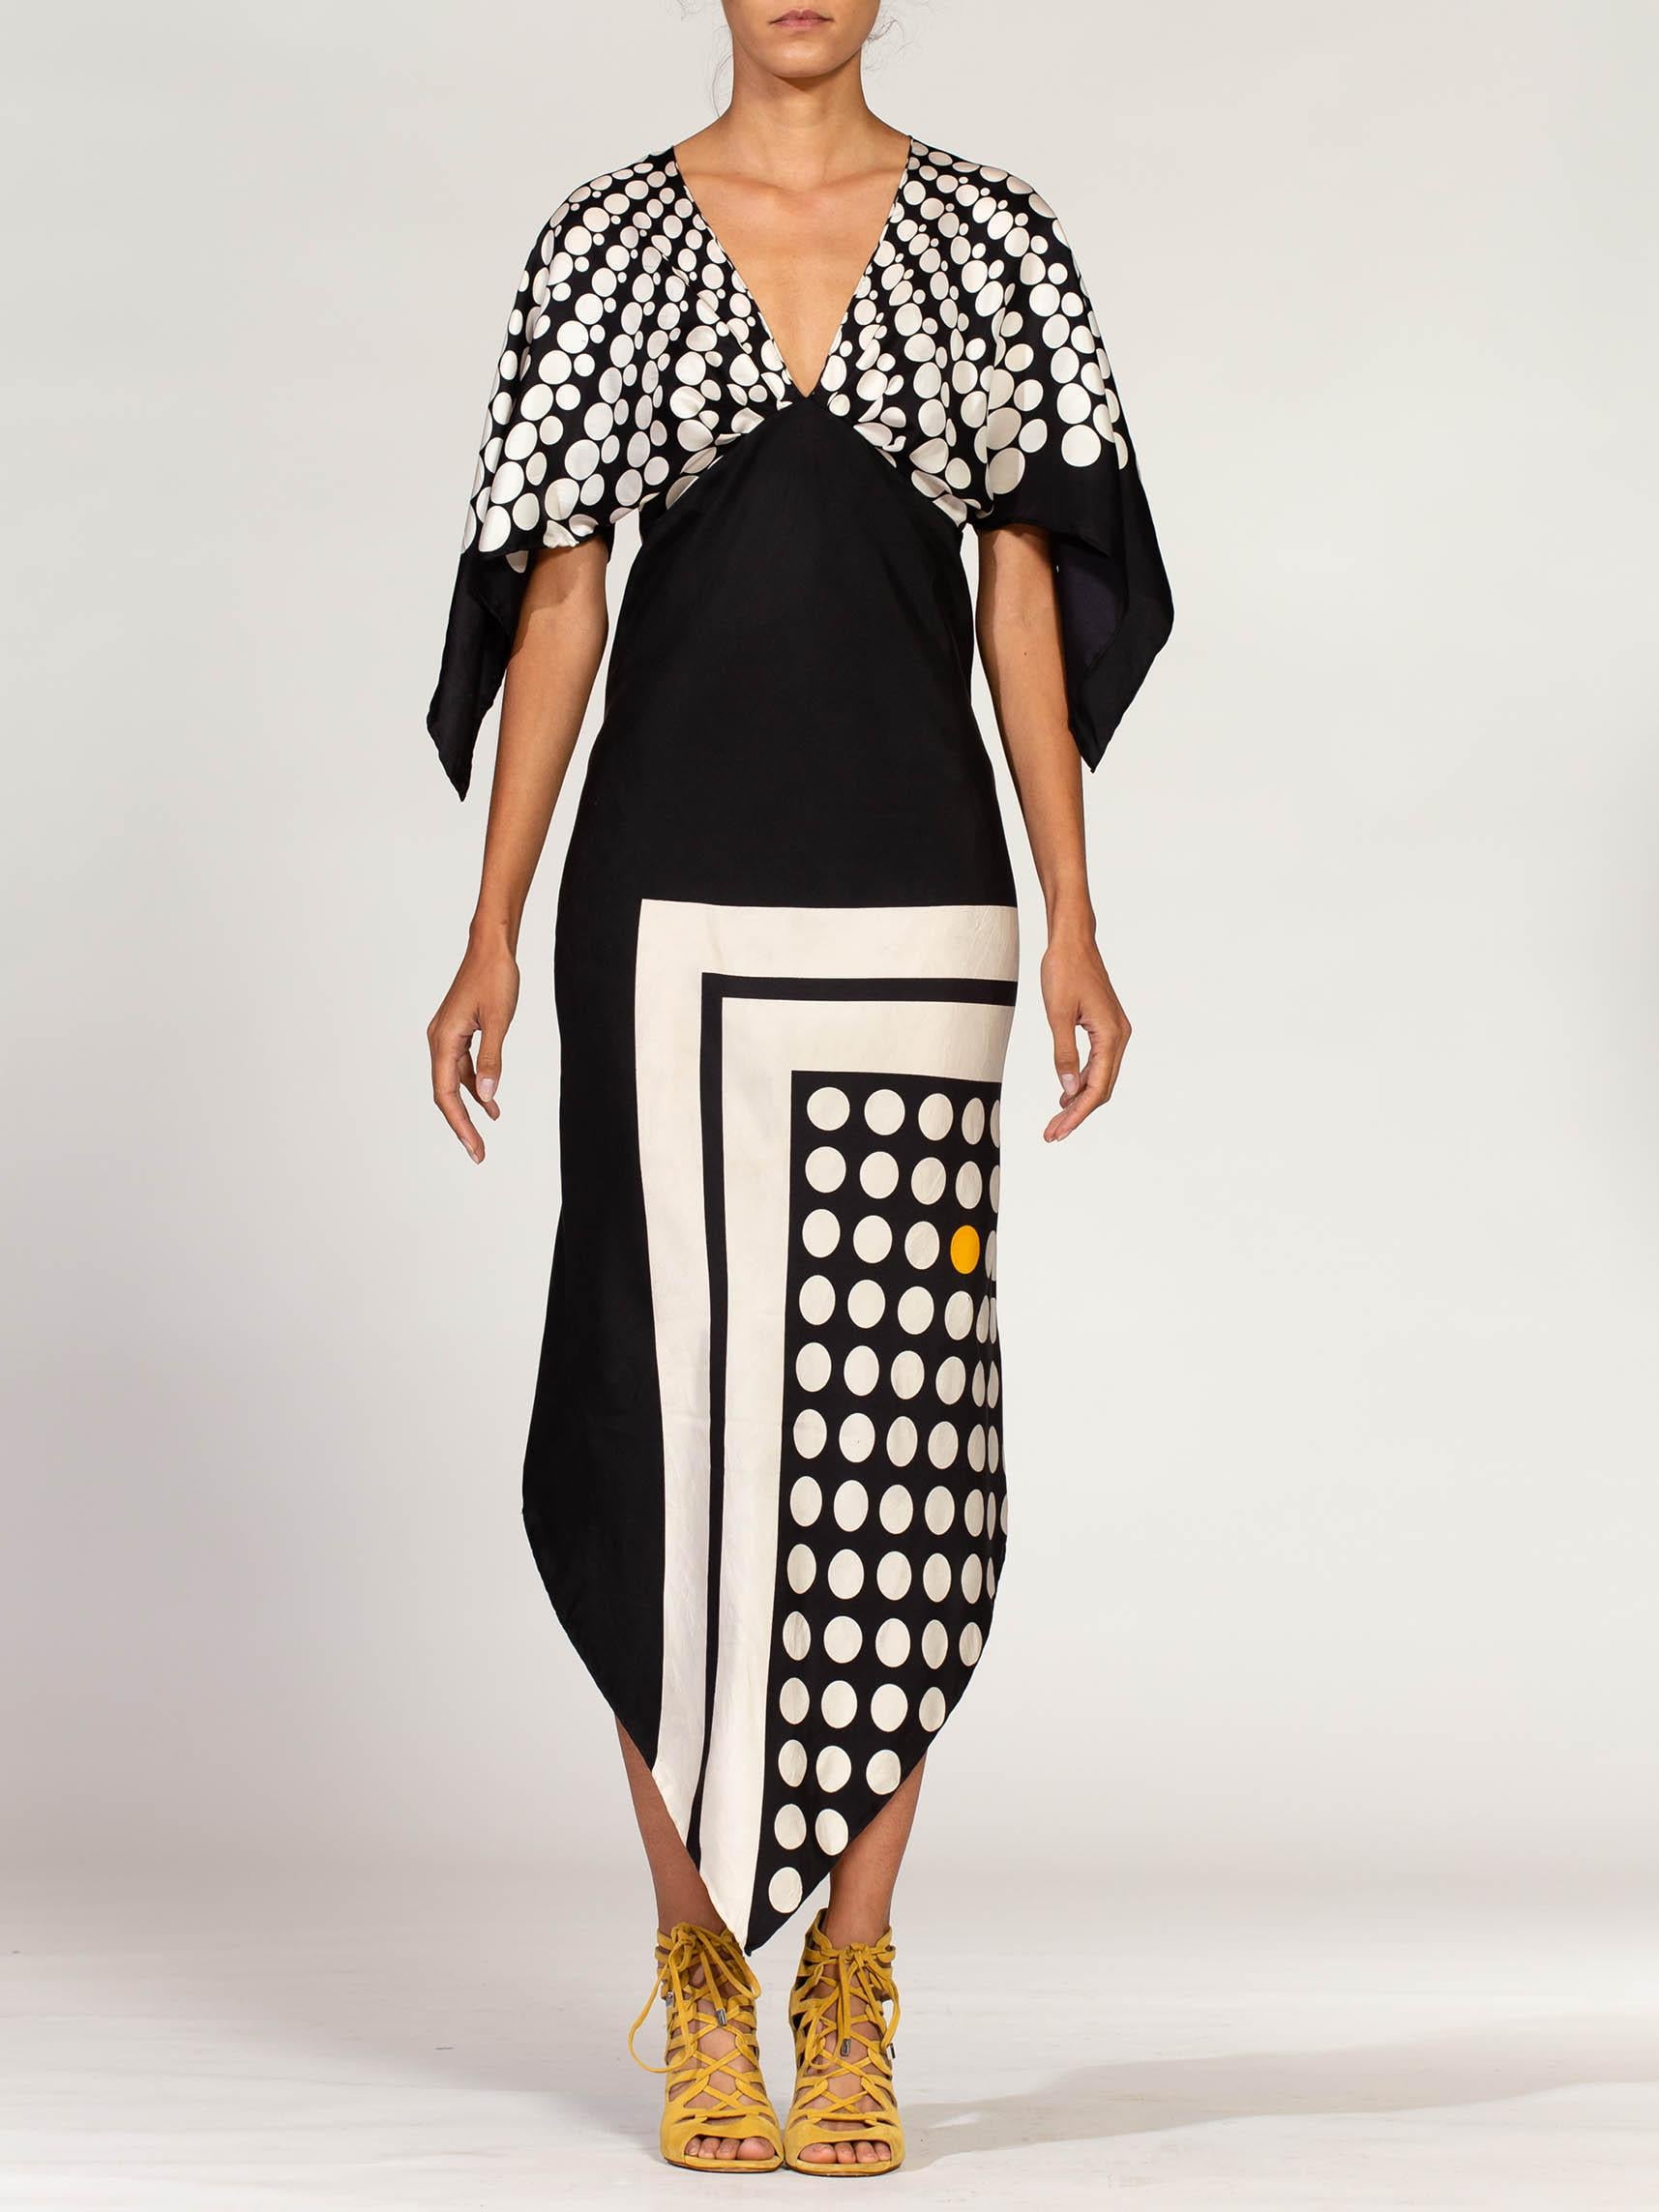 MORPHEW COLLECTION Black & White Bias Cut Silk Twill Two-Scarf Dress 4